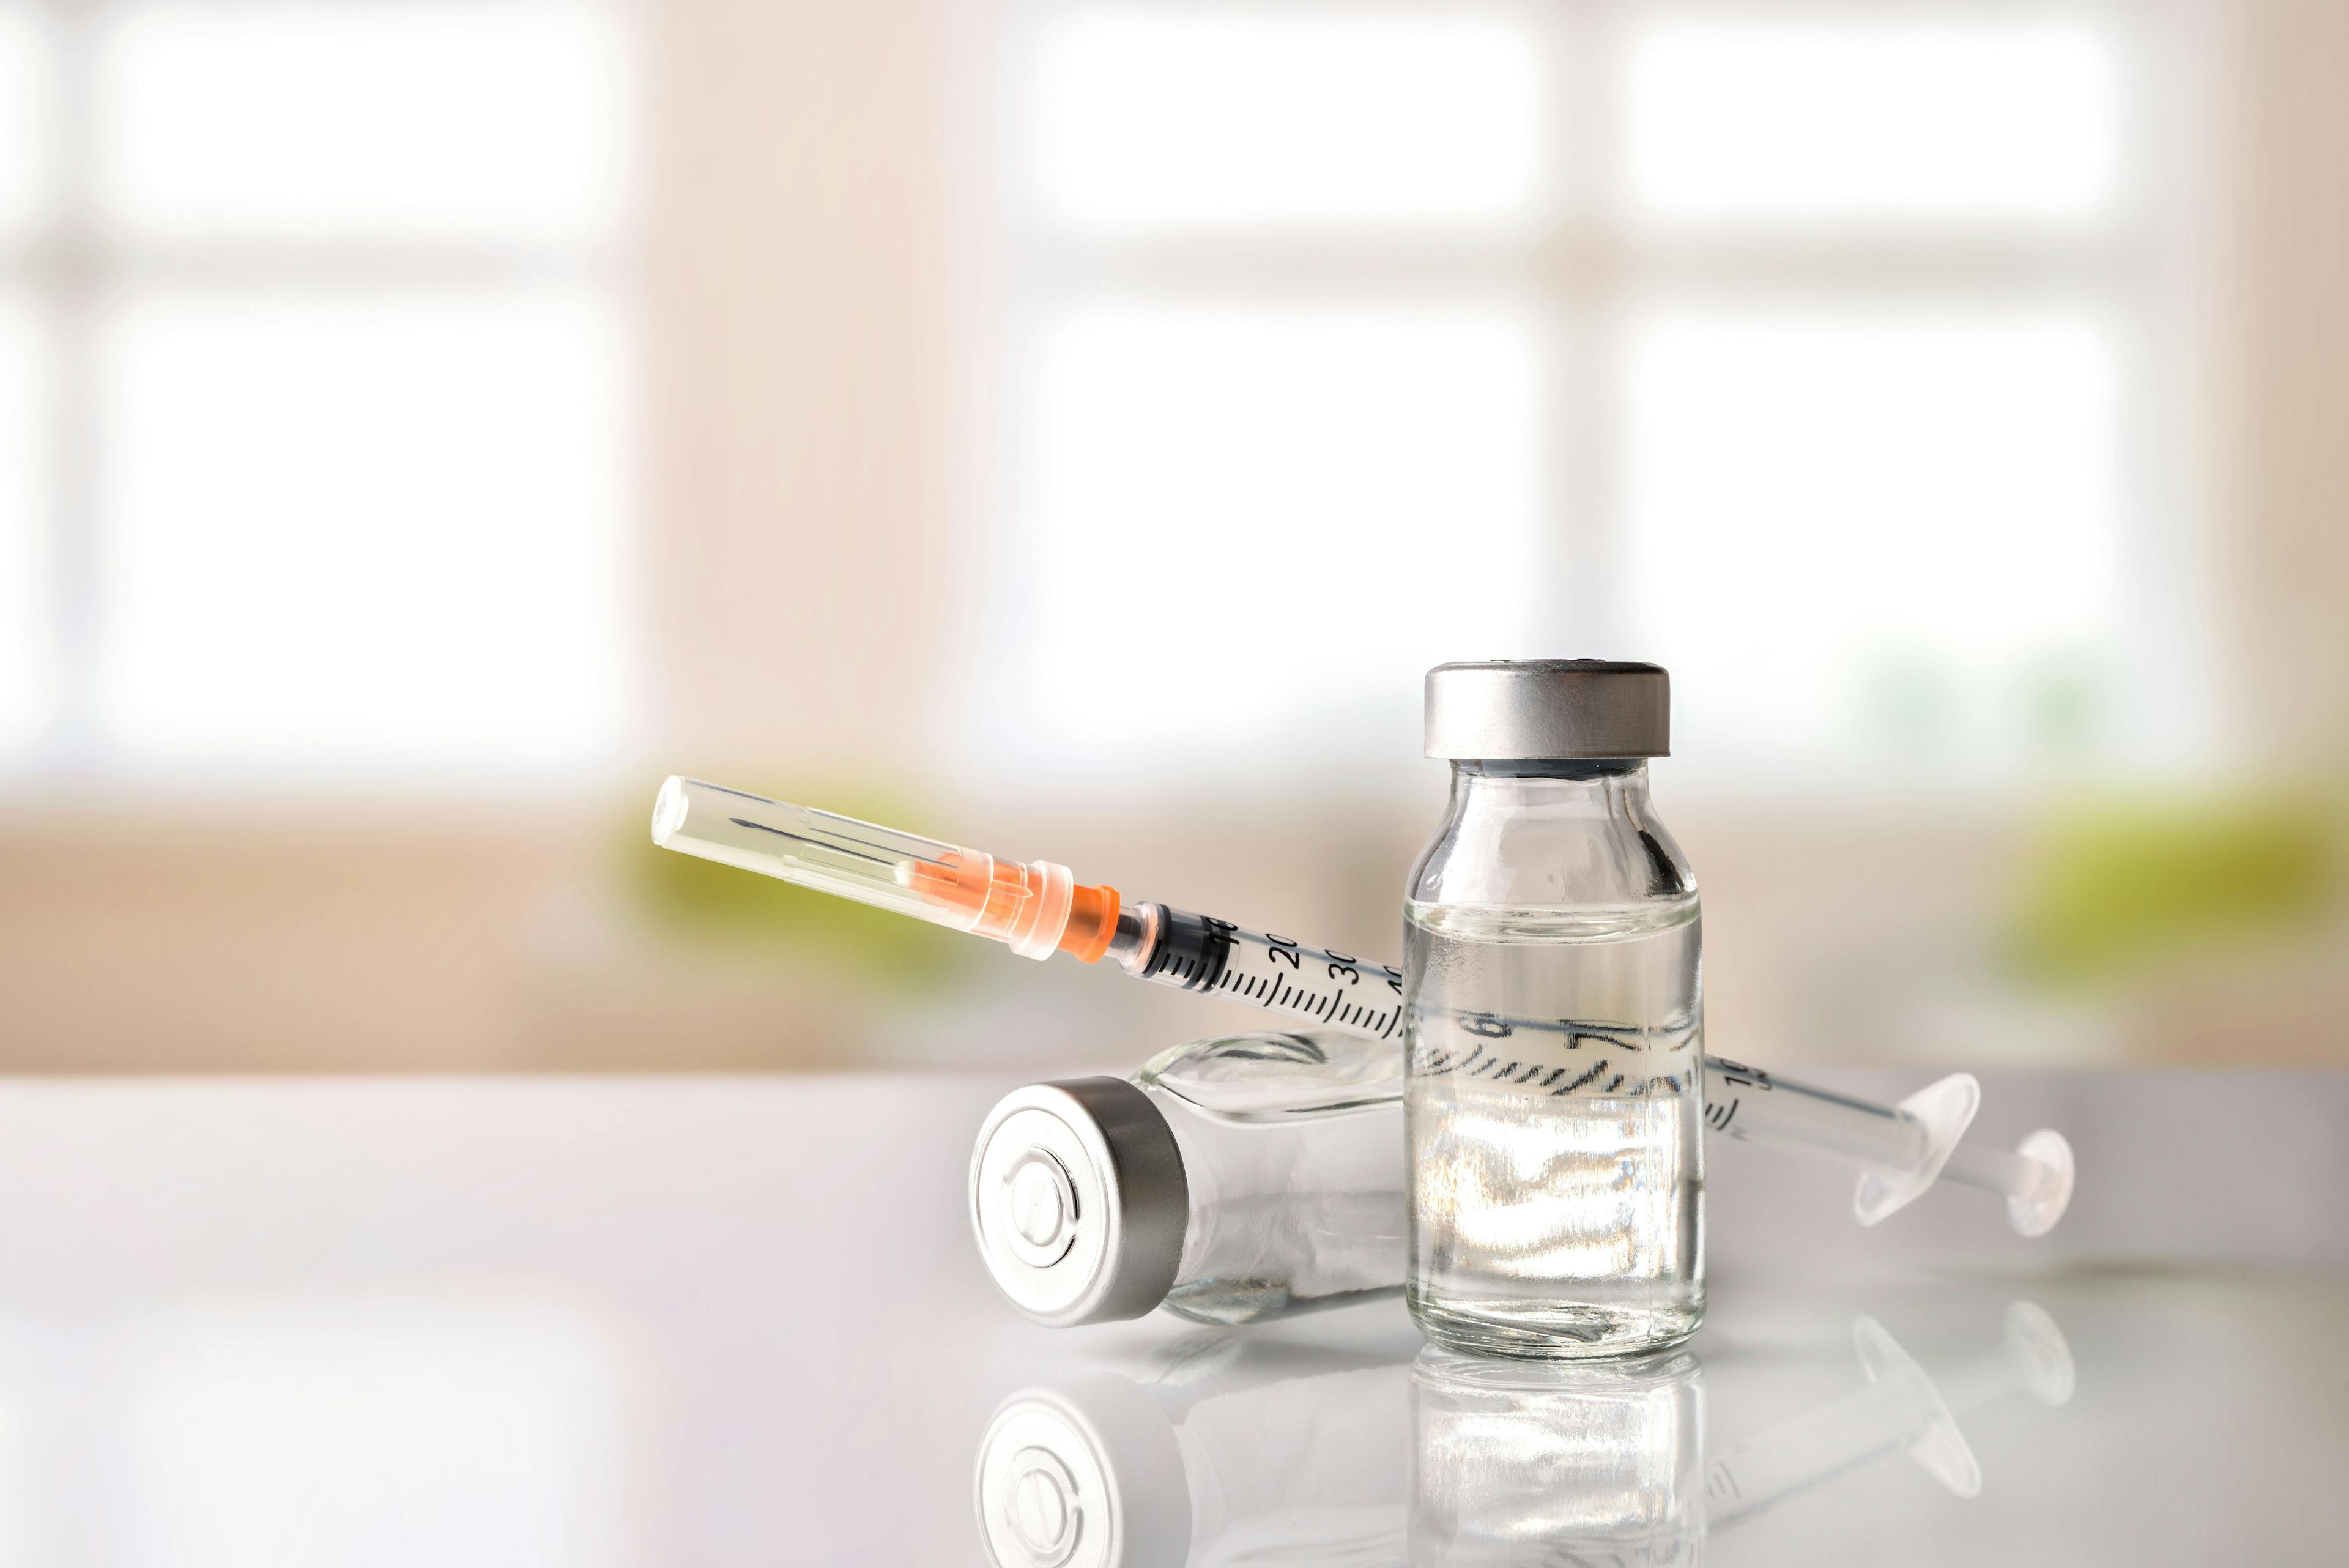 Insulin vials | Image credit: Davizro Photography - stock.adobe.com